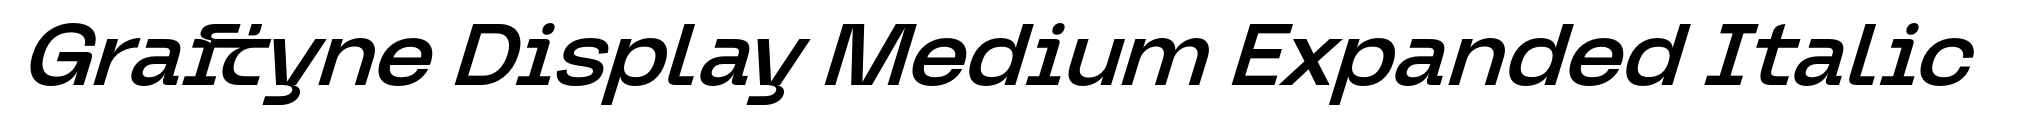 Graftyne Display Medium Expanded Italic image